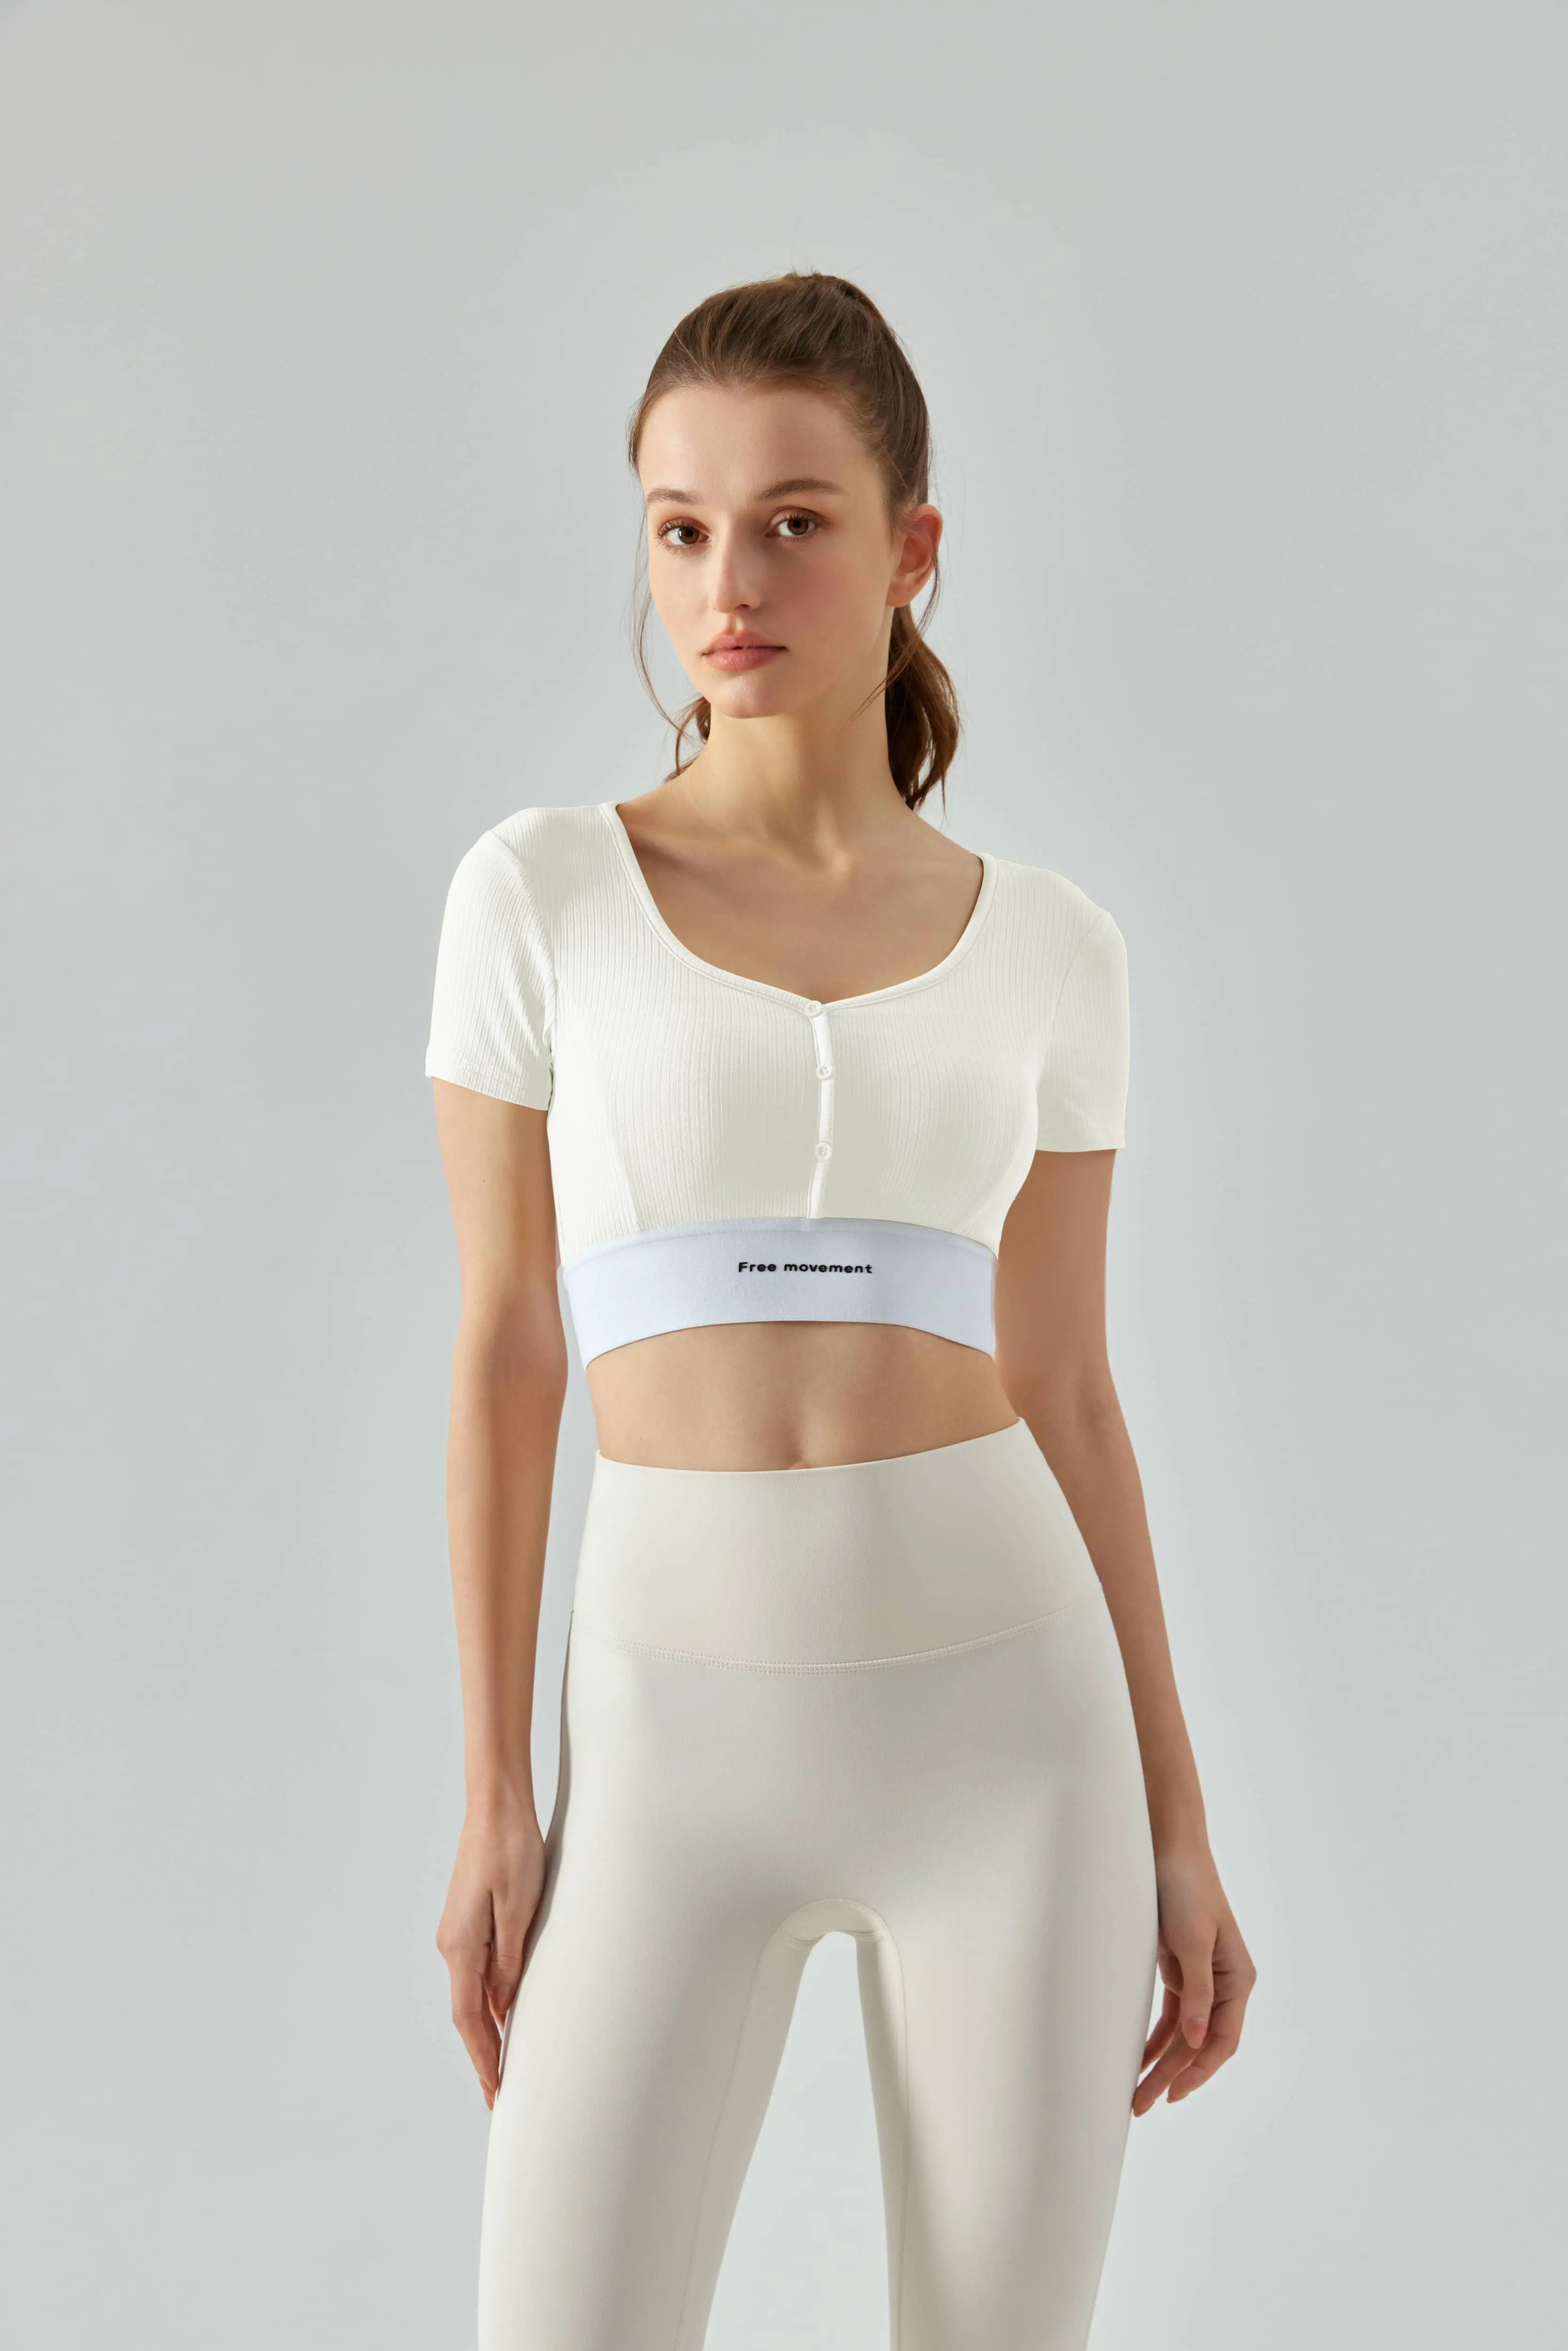 Loose yoga clothes for fitness sport shirt women blouse O-neck workout –  Sarah Jones1